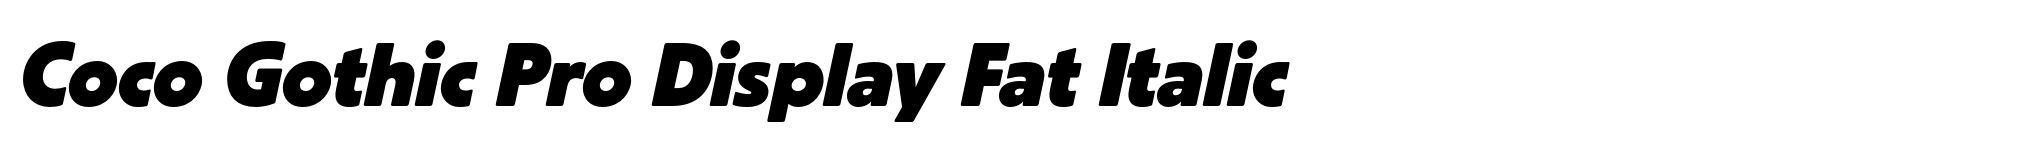 Coco Gothic Pro Display Fat Italic image